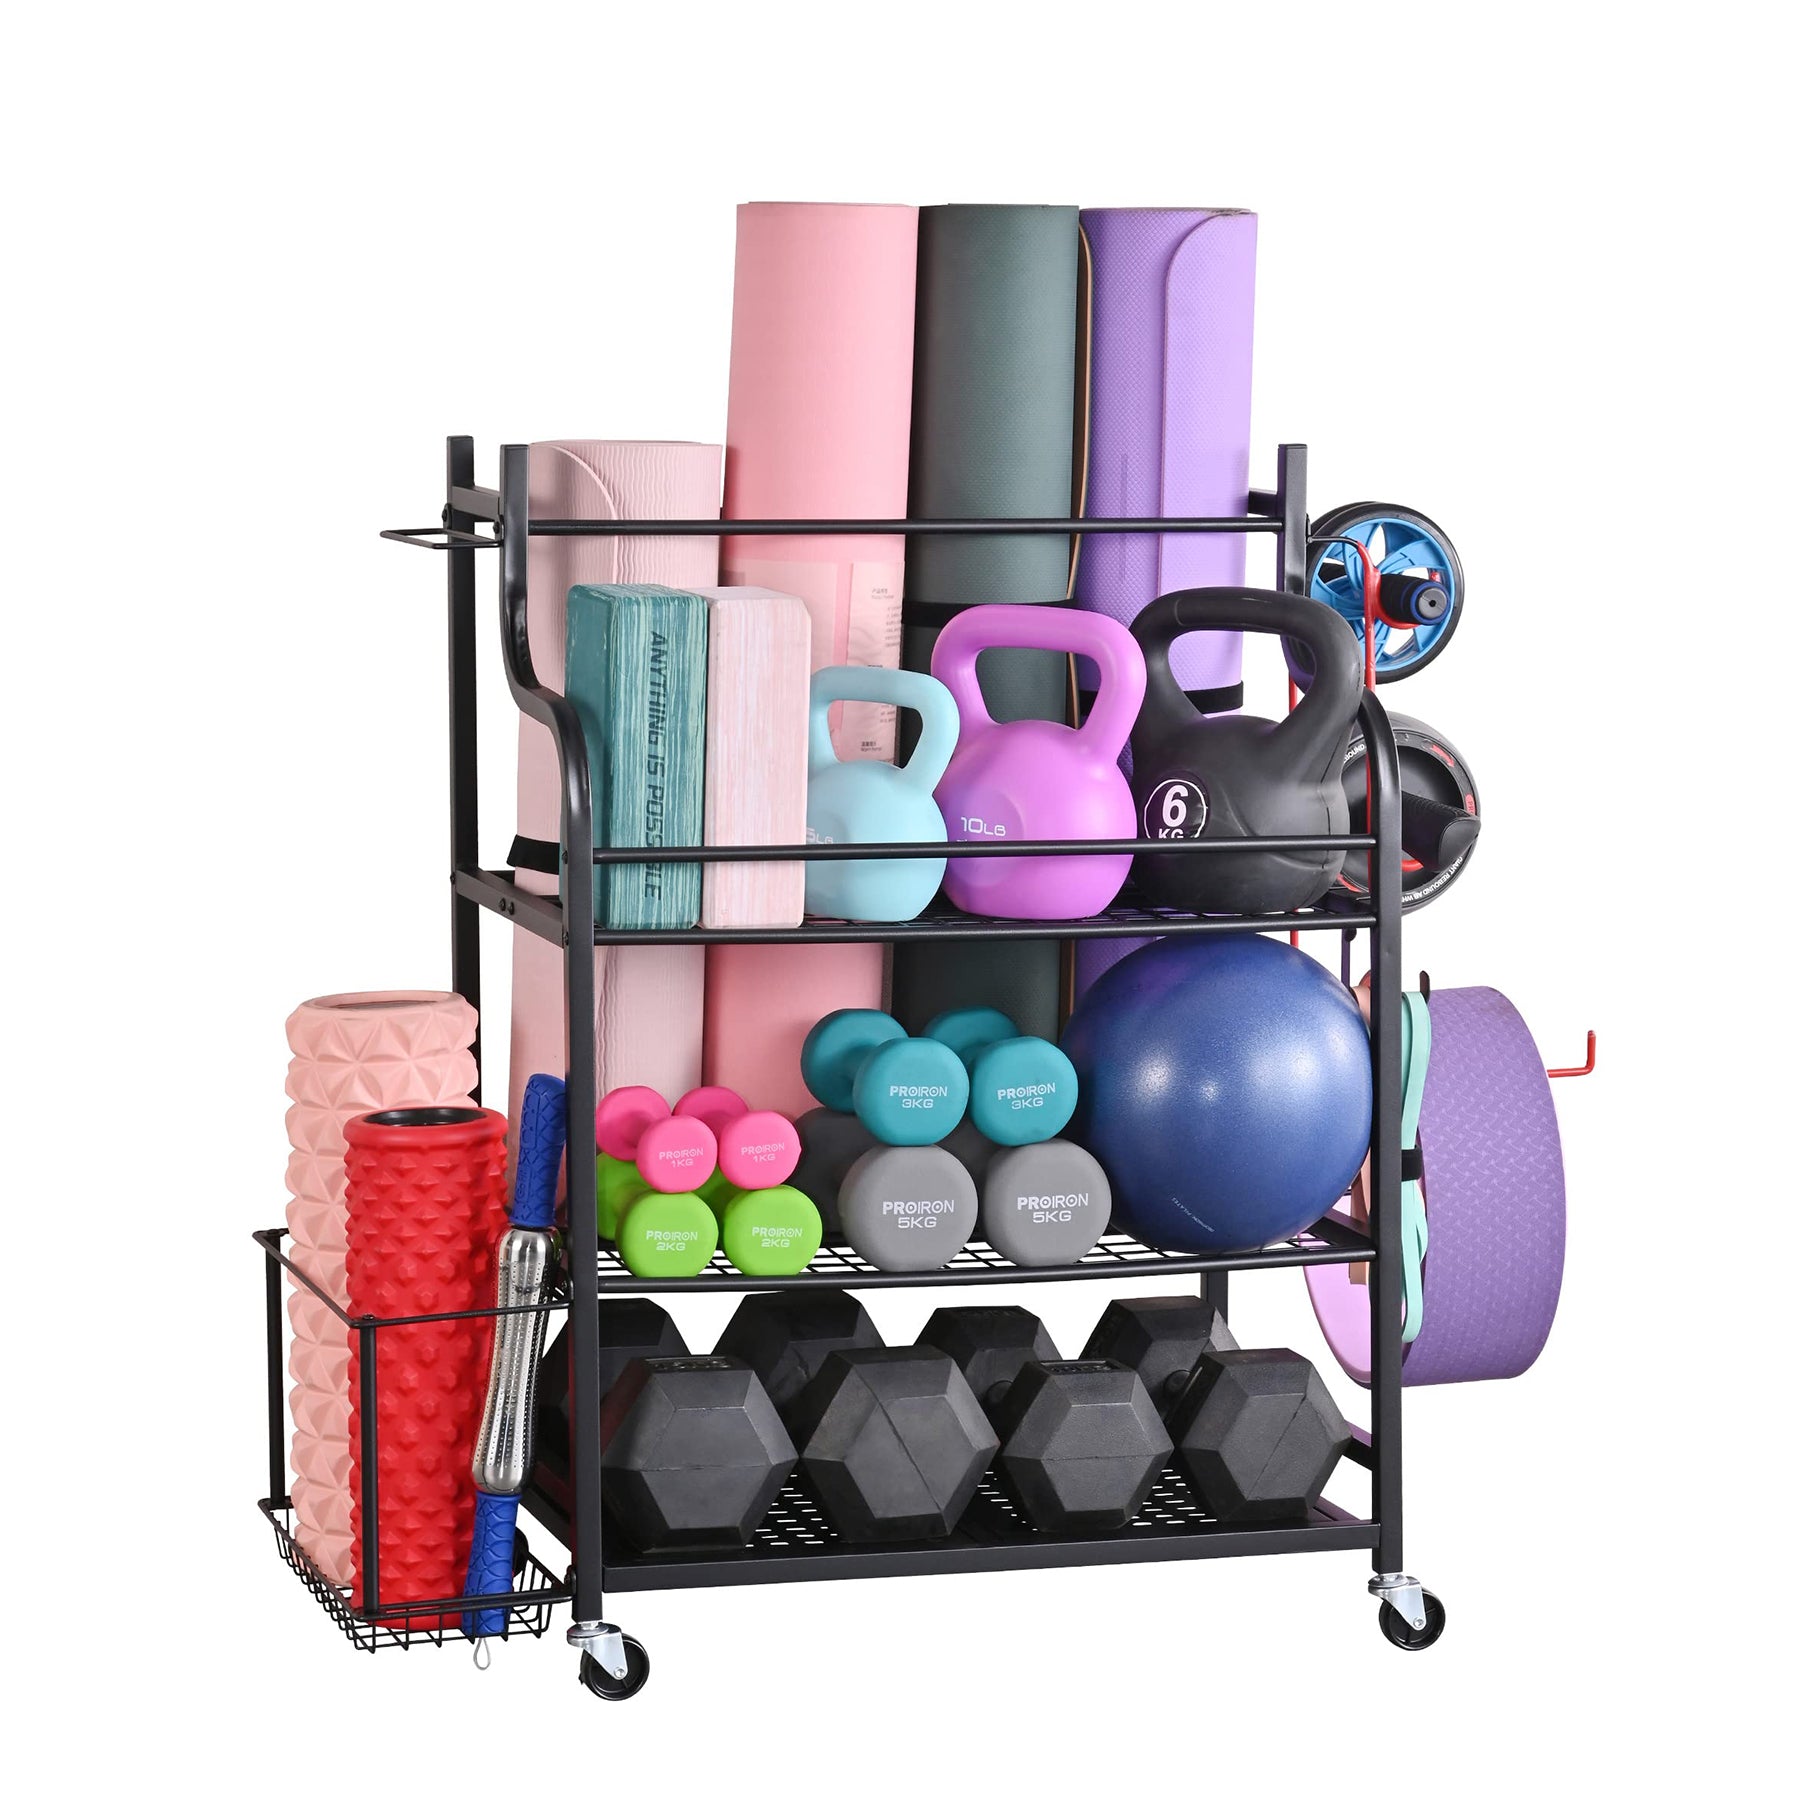 Yoga Mat Storage Rack Yoga Mat Holder Home Gym Equipment Workout